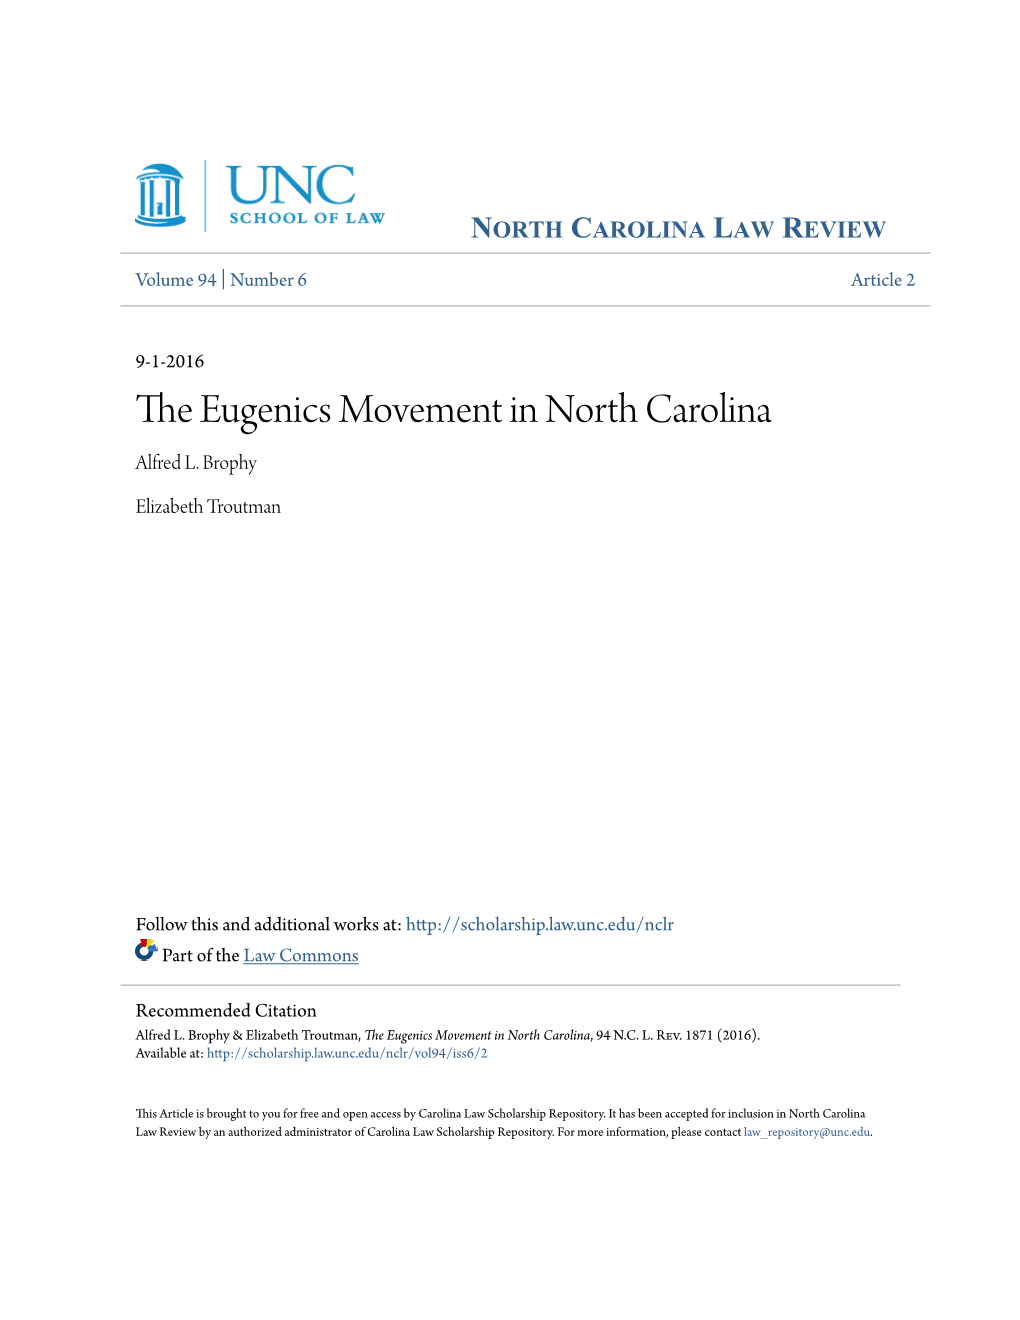 The Eugenics Movement in North Carolina, 94 N.C